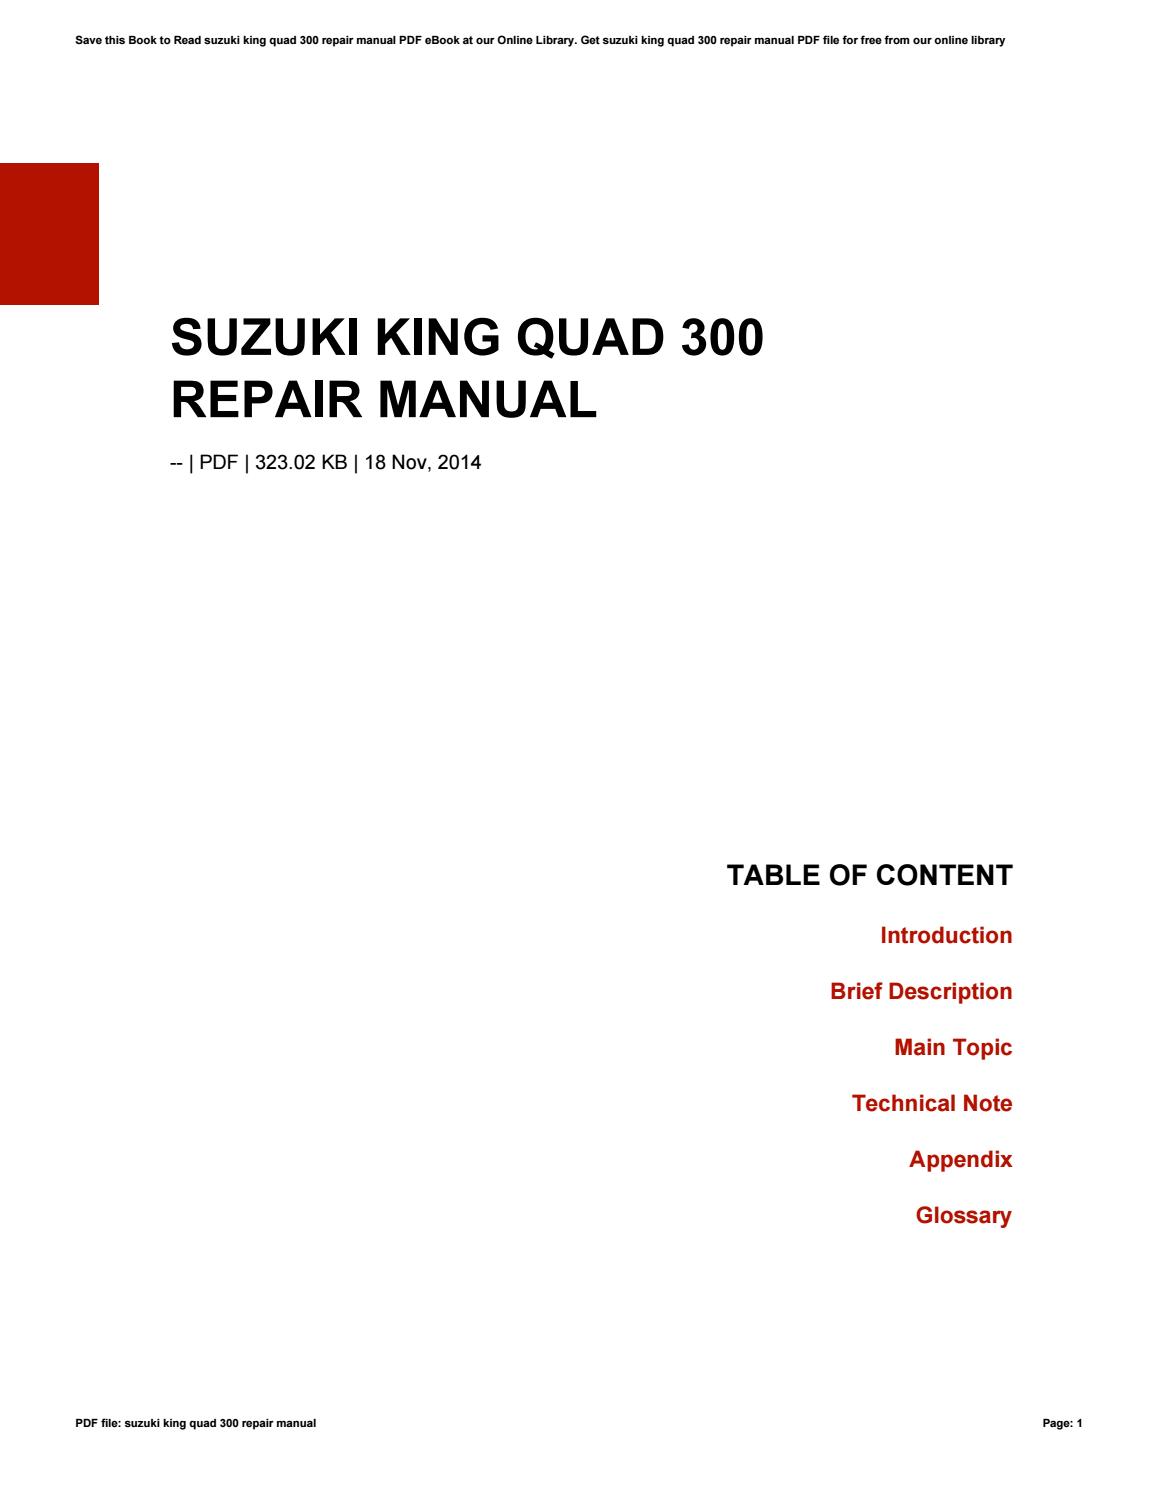 Suzuki King Quad 300 Owners Manual Download